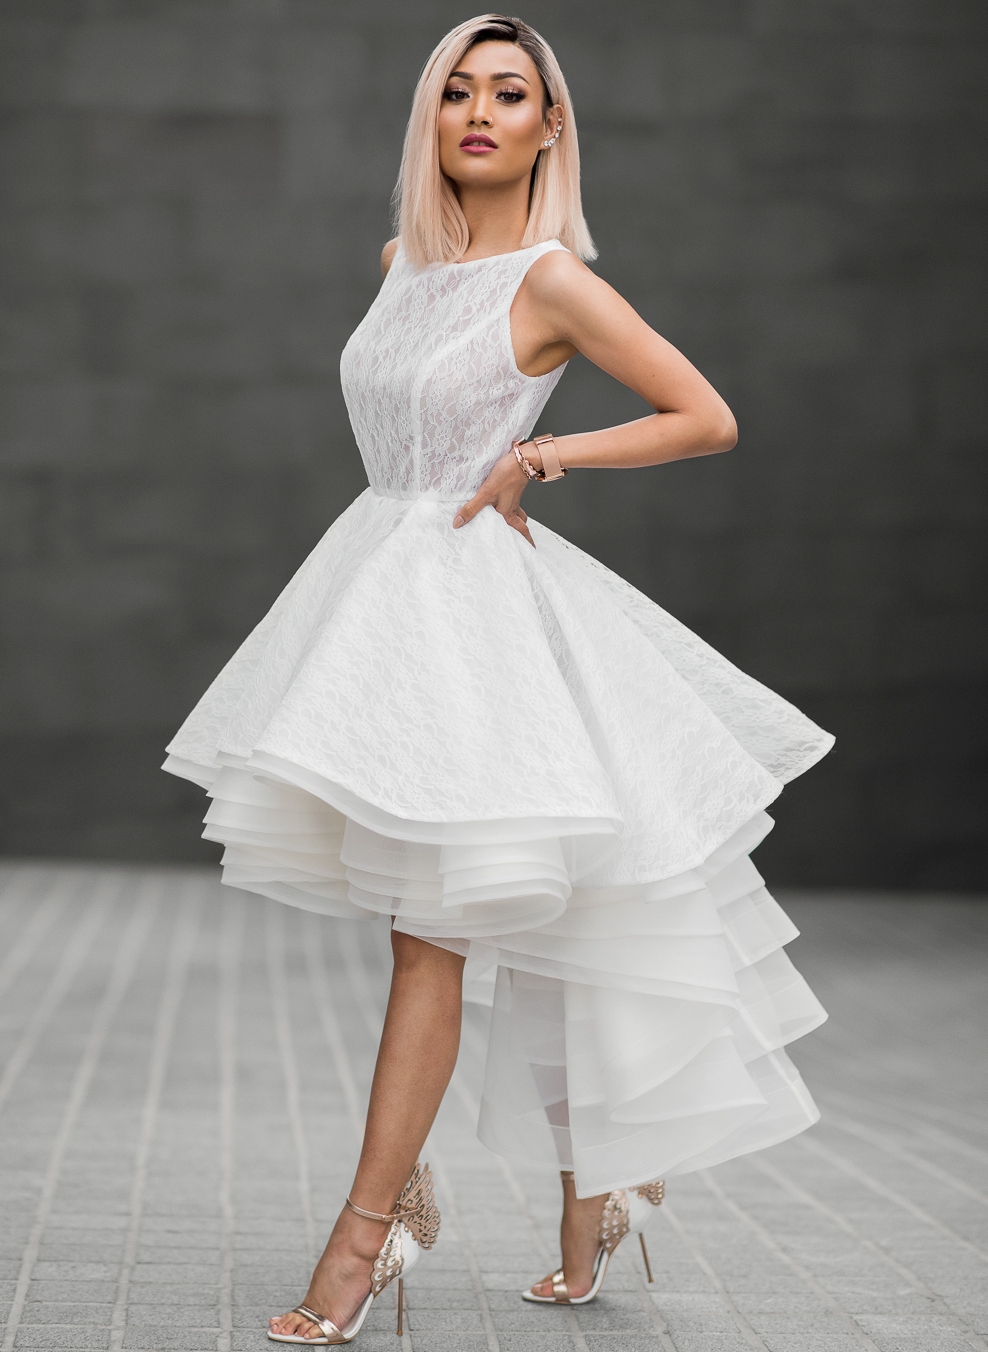 Micah-Gianneli-White-Runway-Sophia-Webster-Luisaviaroma-White-Bridal-Fashion-Editorial-Freedom-Couture